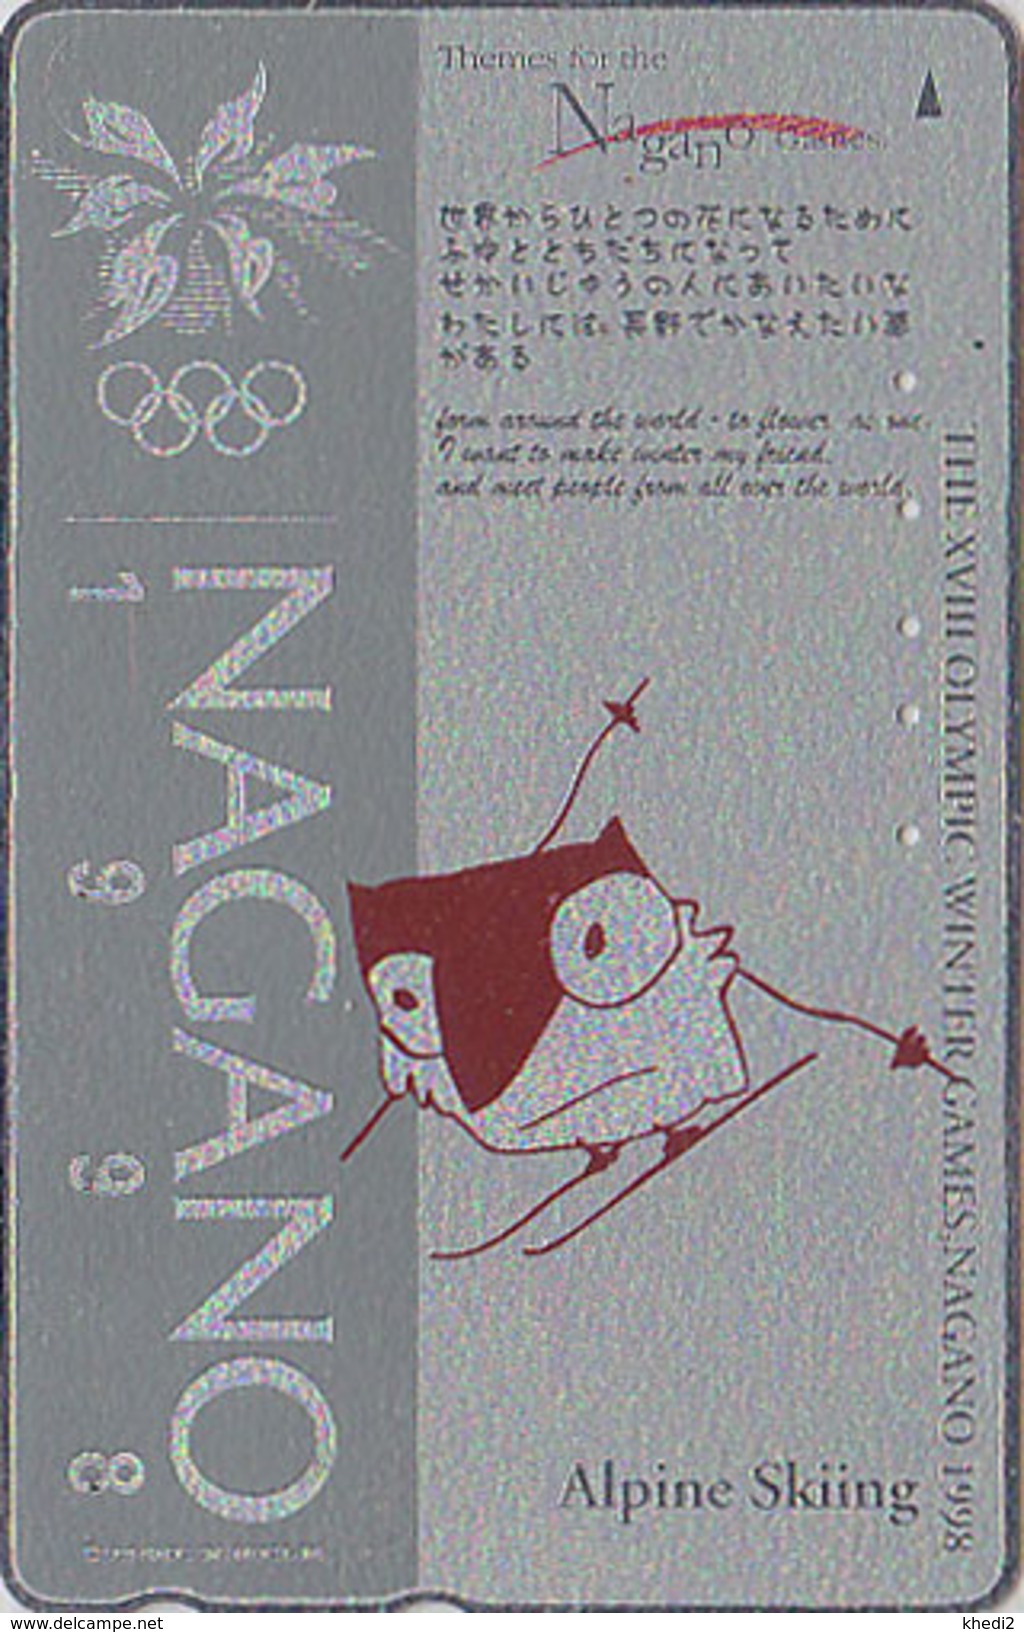 TC ARGENT JAPON / 271-03298 - HIBOU Jeux Olympiques NAGANO SKI ALPIN - OWL OLYMPIC GAMES JAPAN SILVER Free Pc - 3940 - Jeux Olympiques